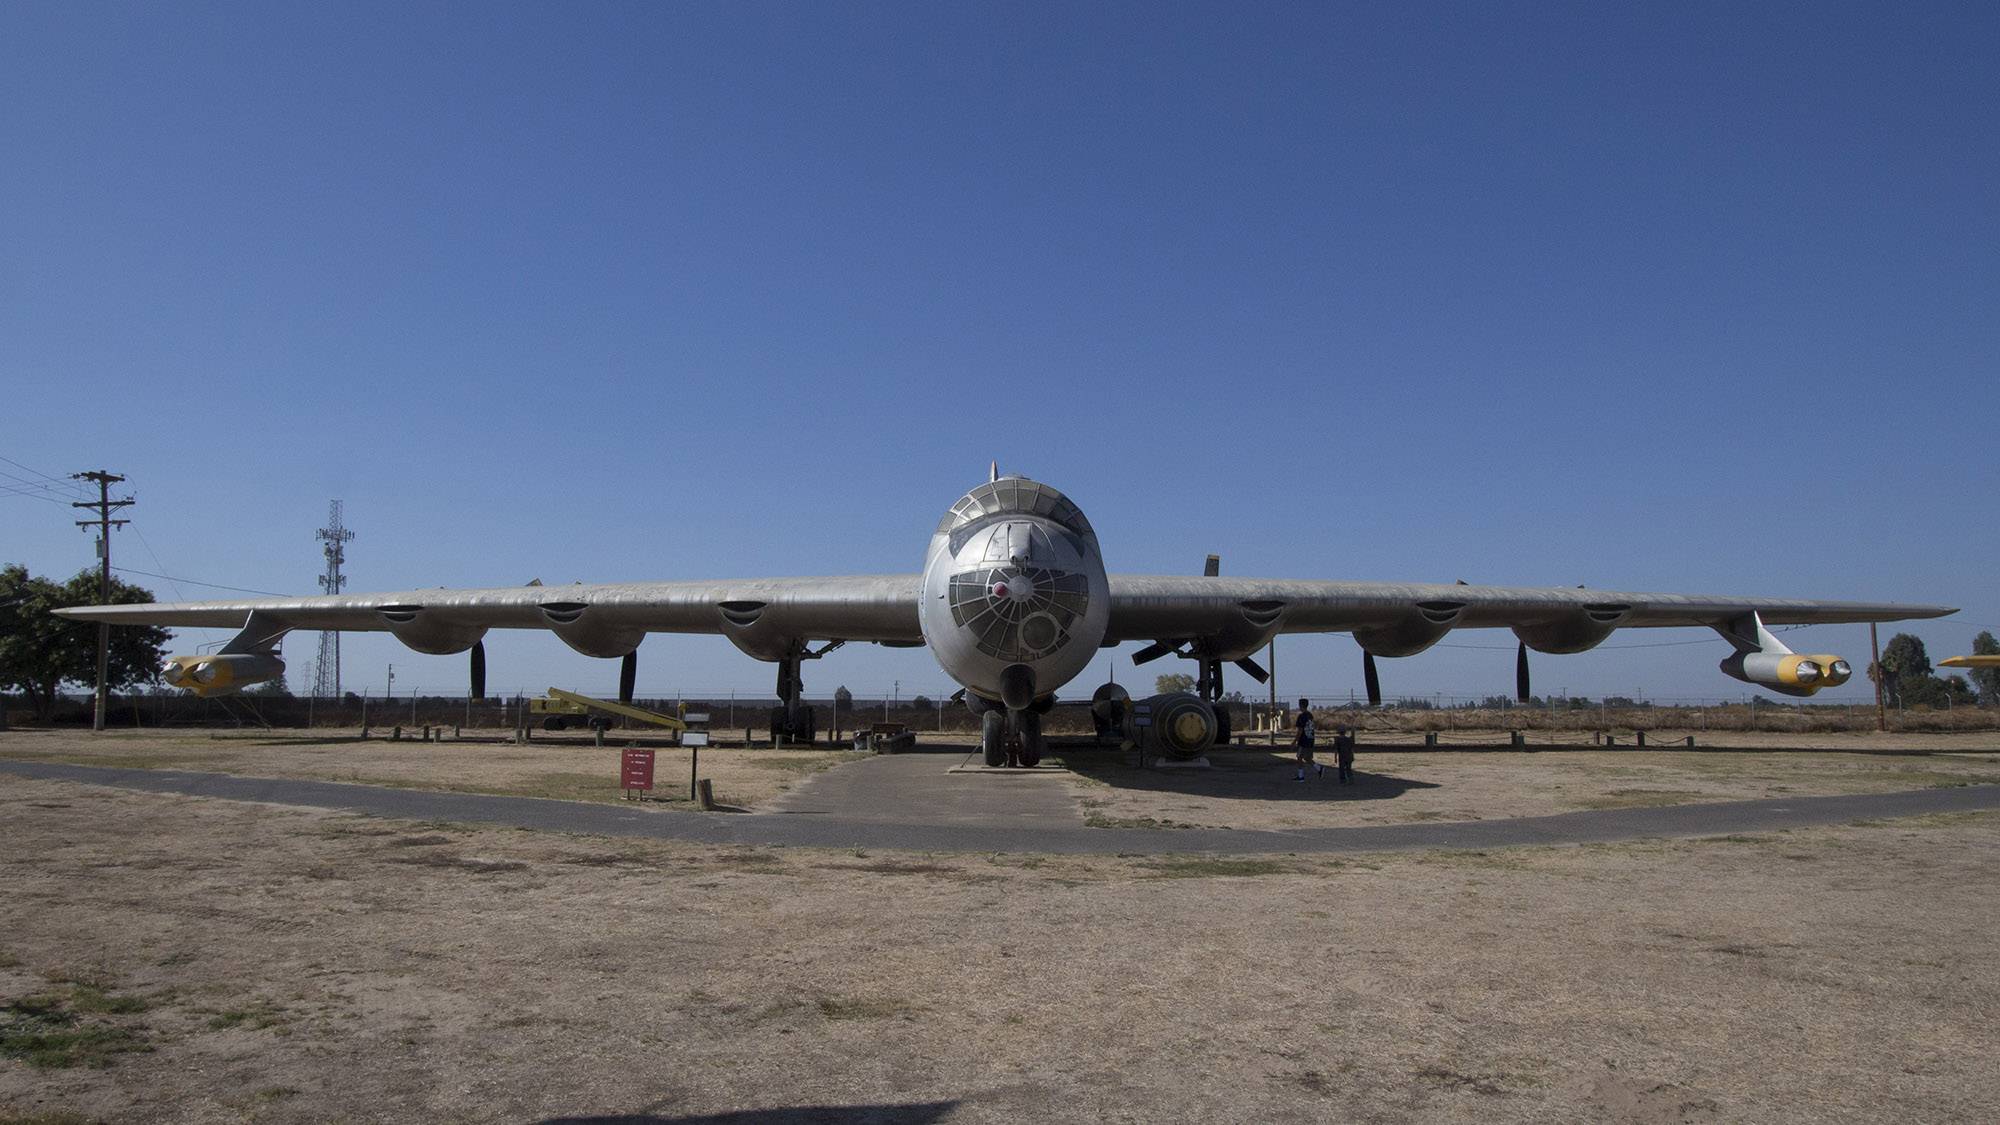 Castle Air Museum: Cold War and World War II Aviation Treasure Trove in the California Desert